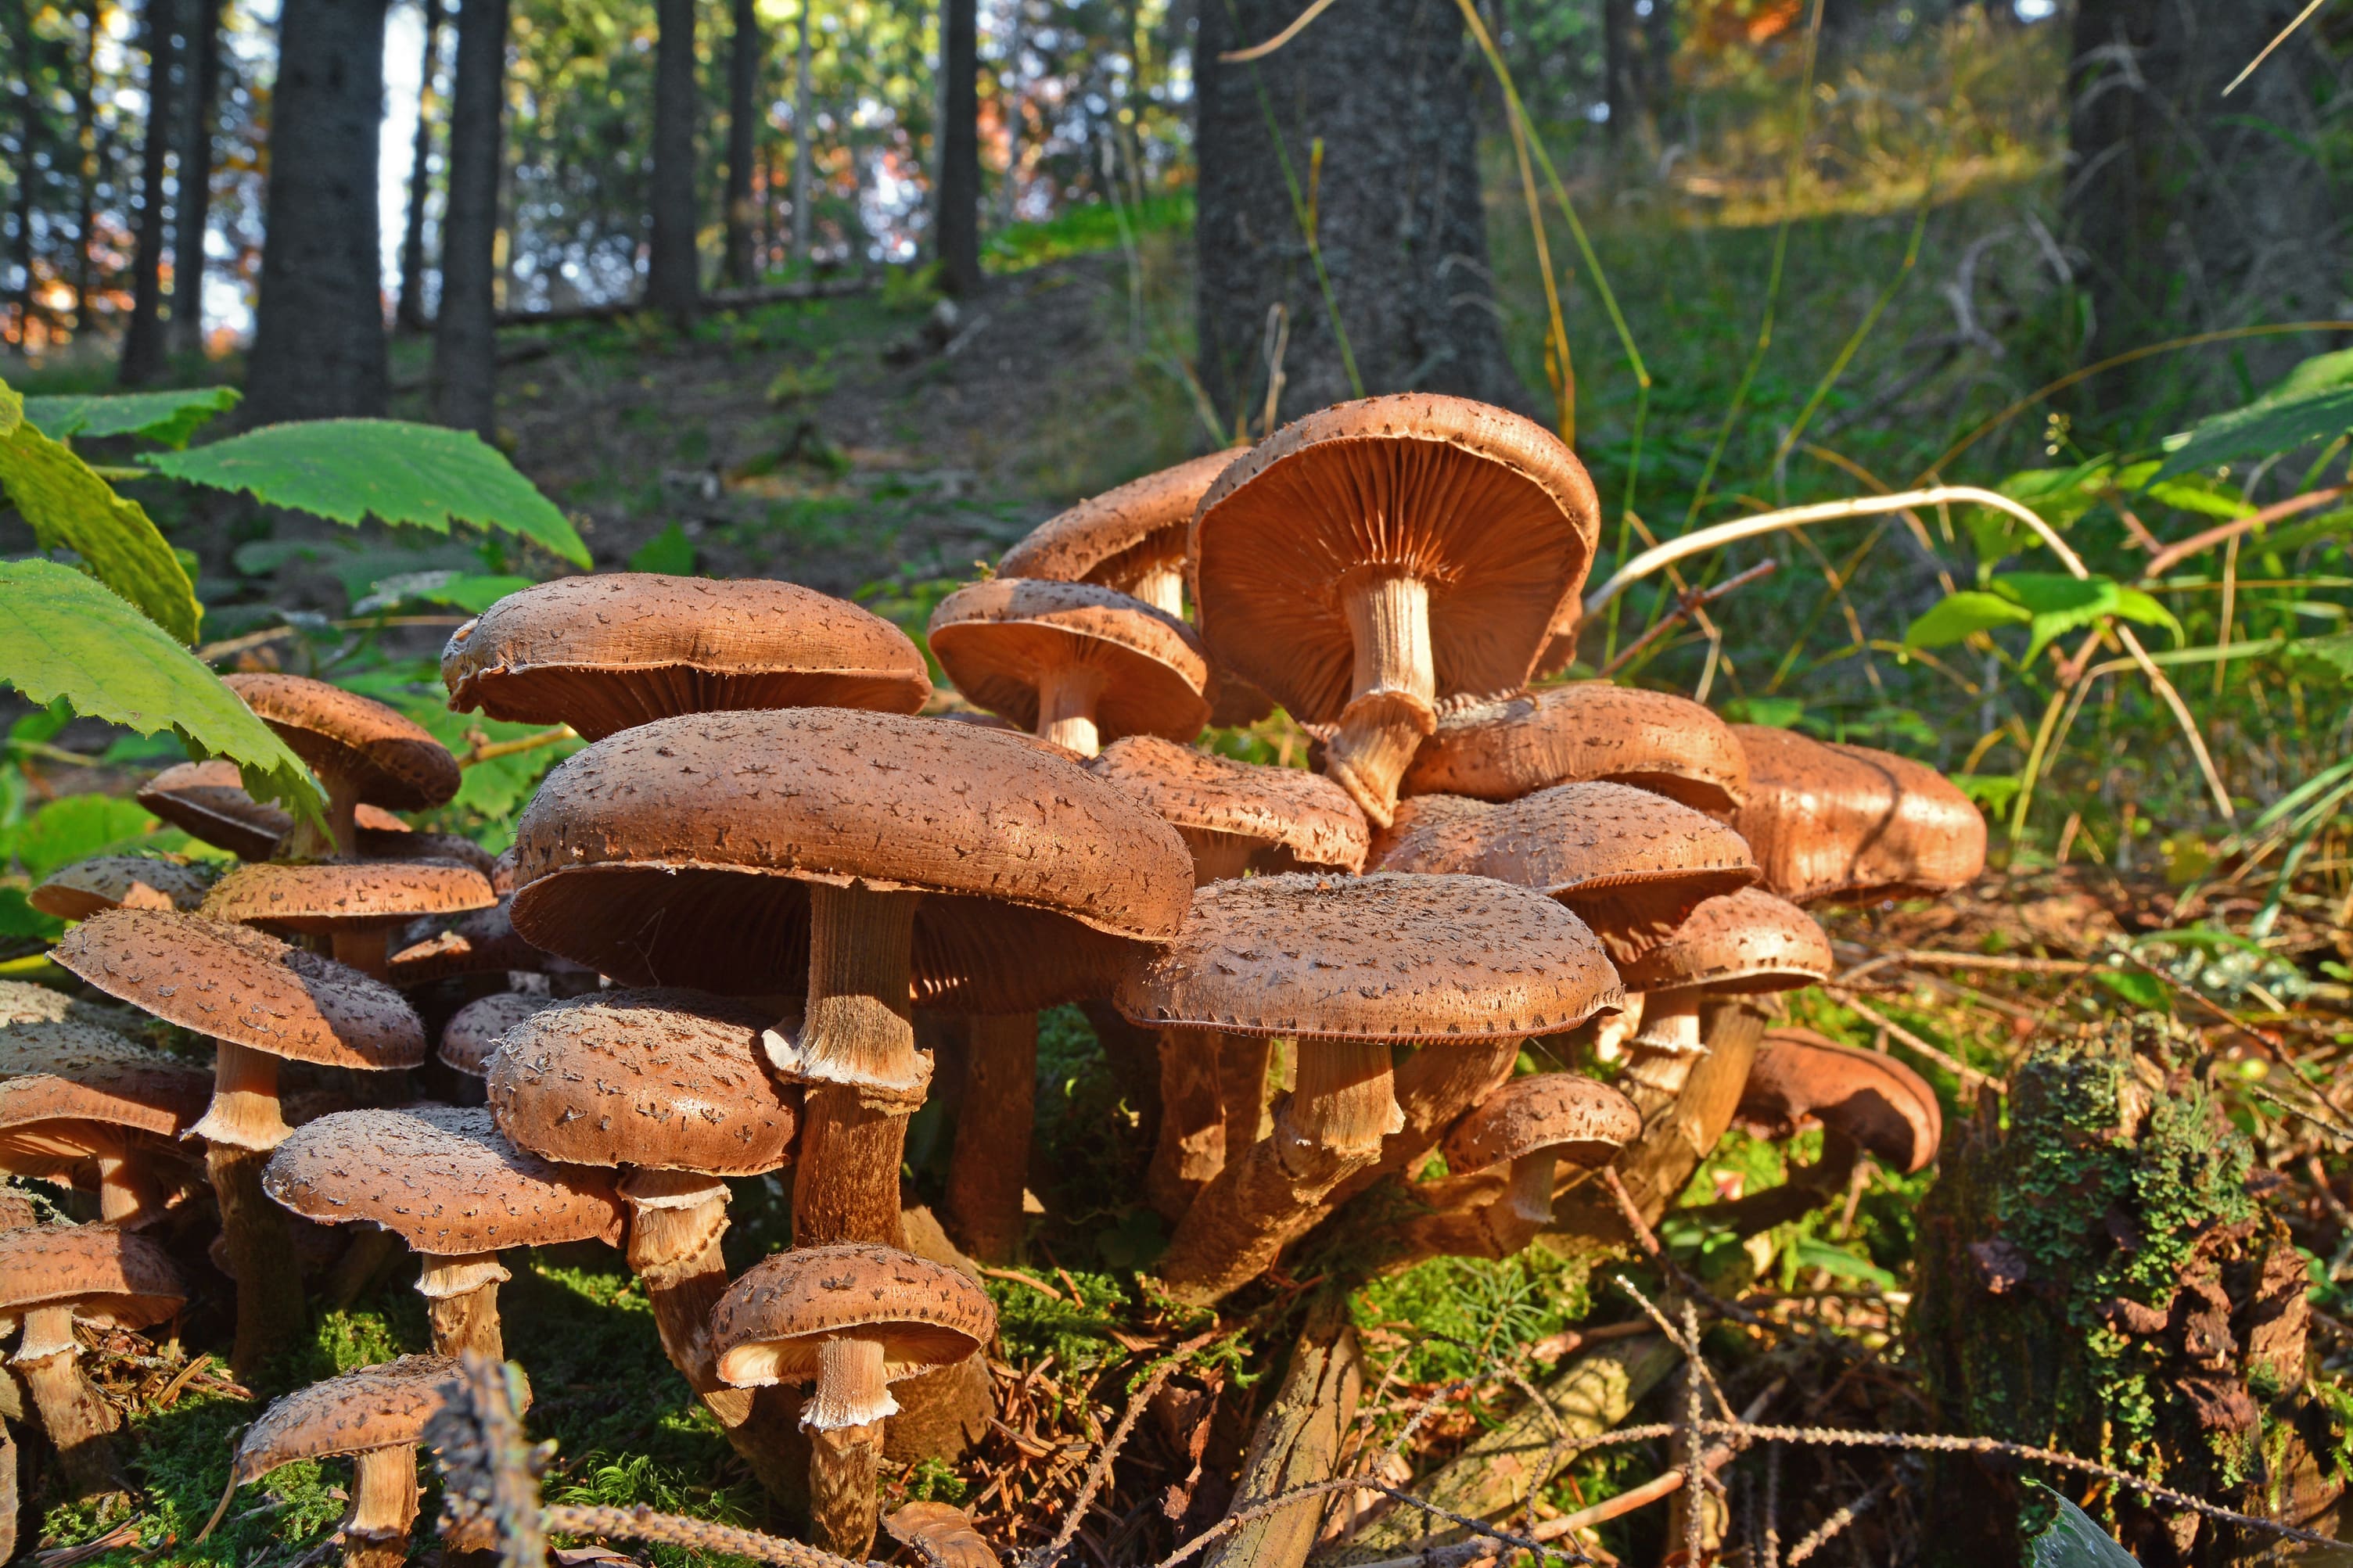 humongous fungus